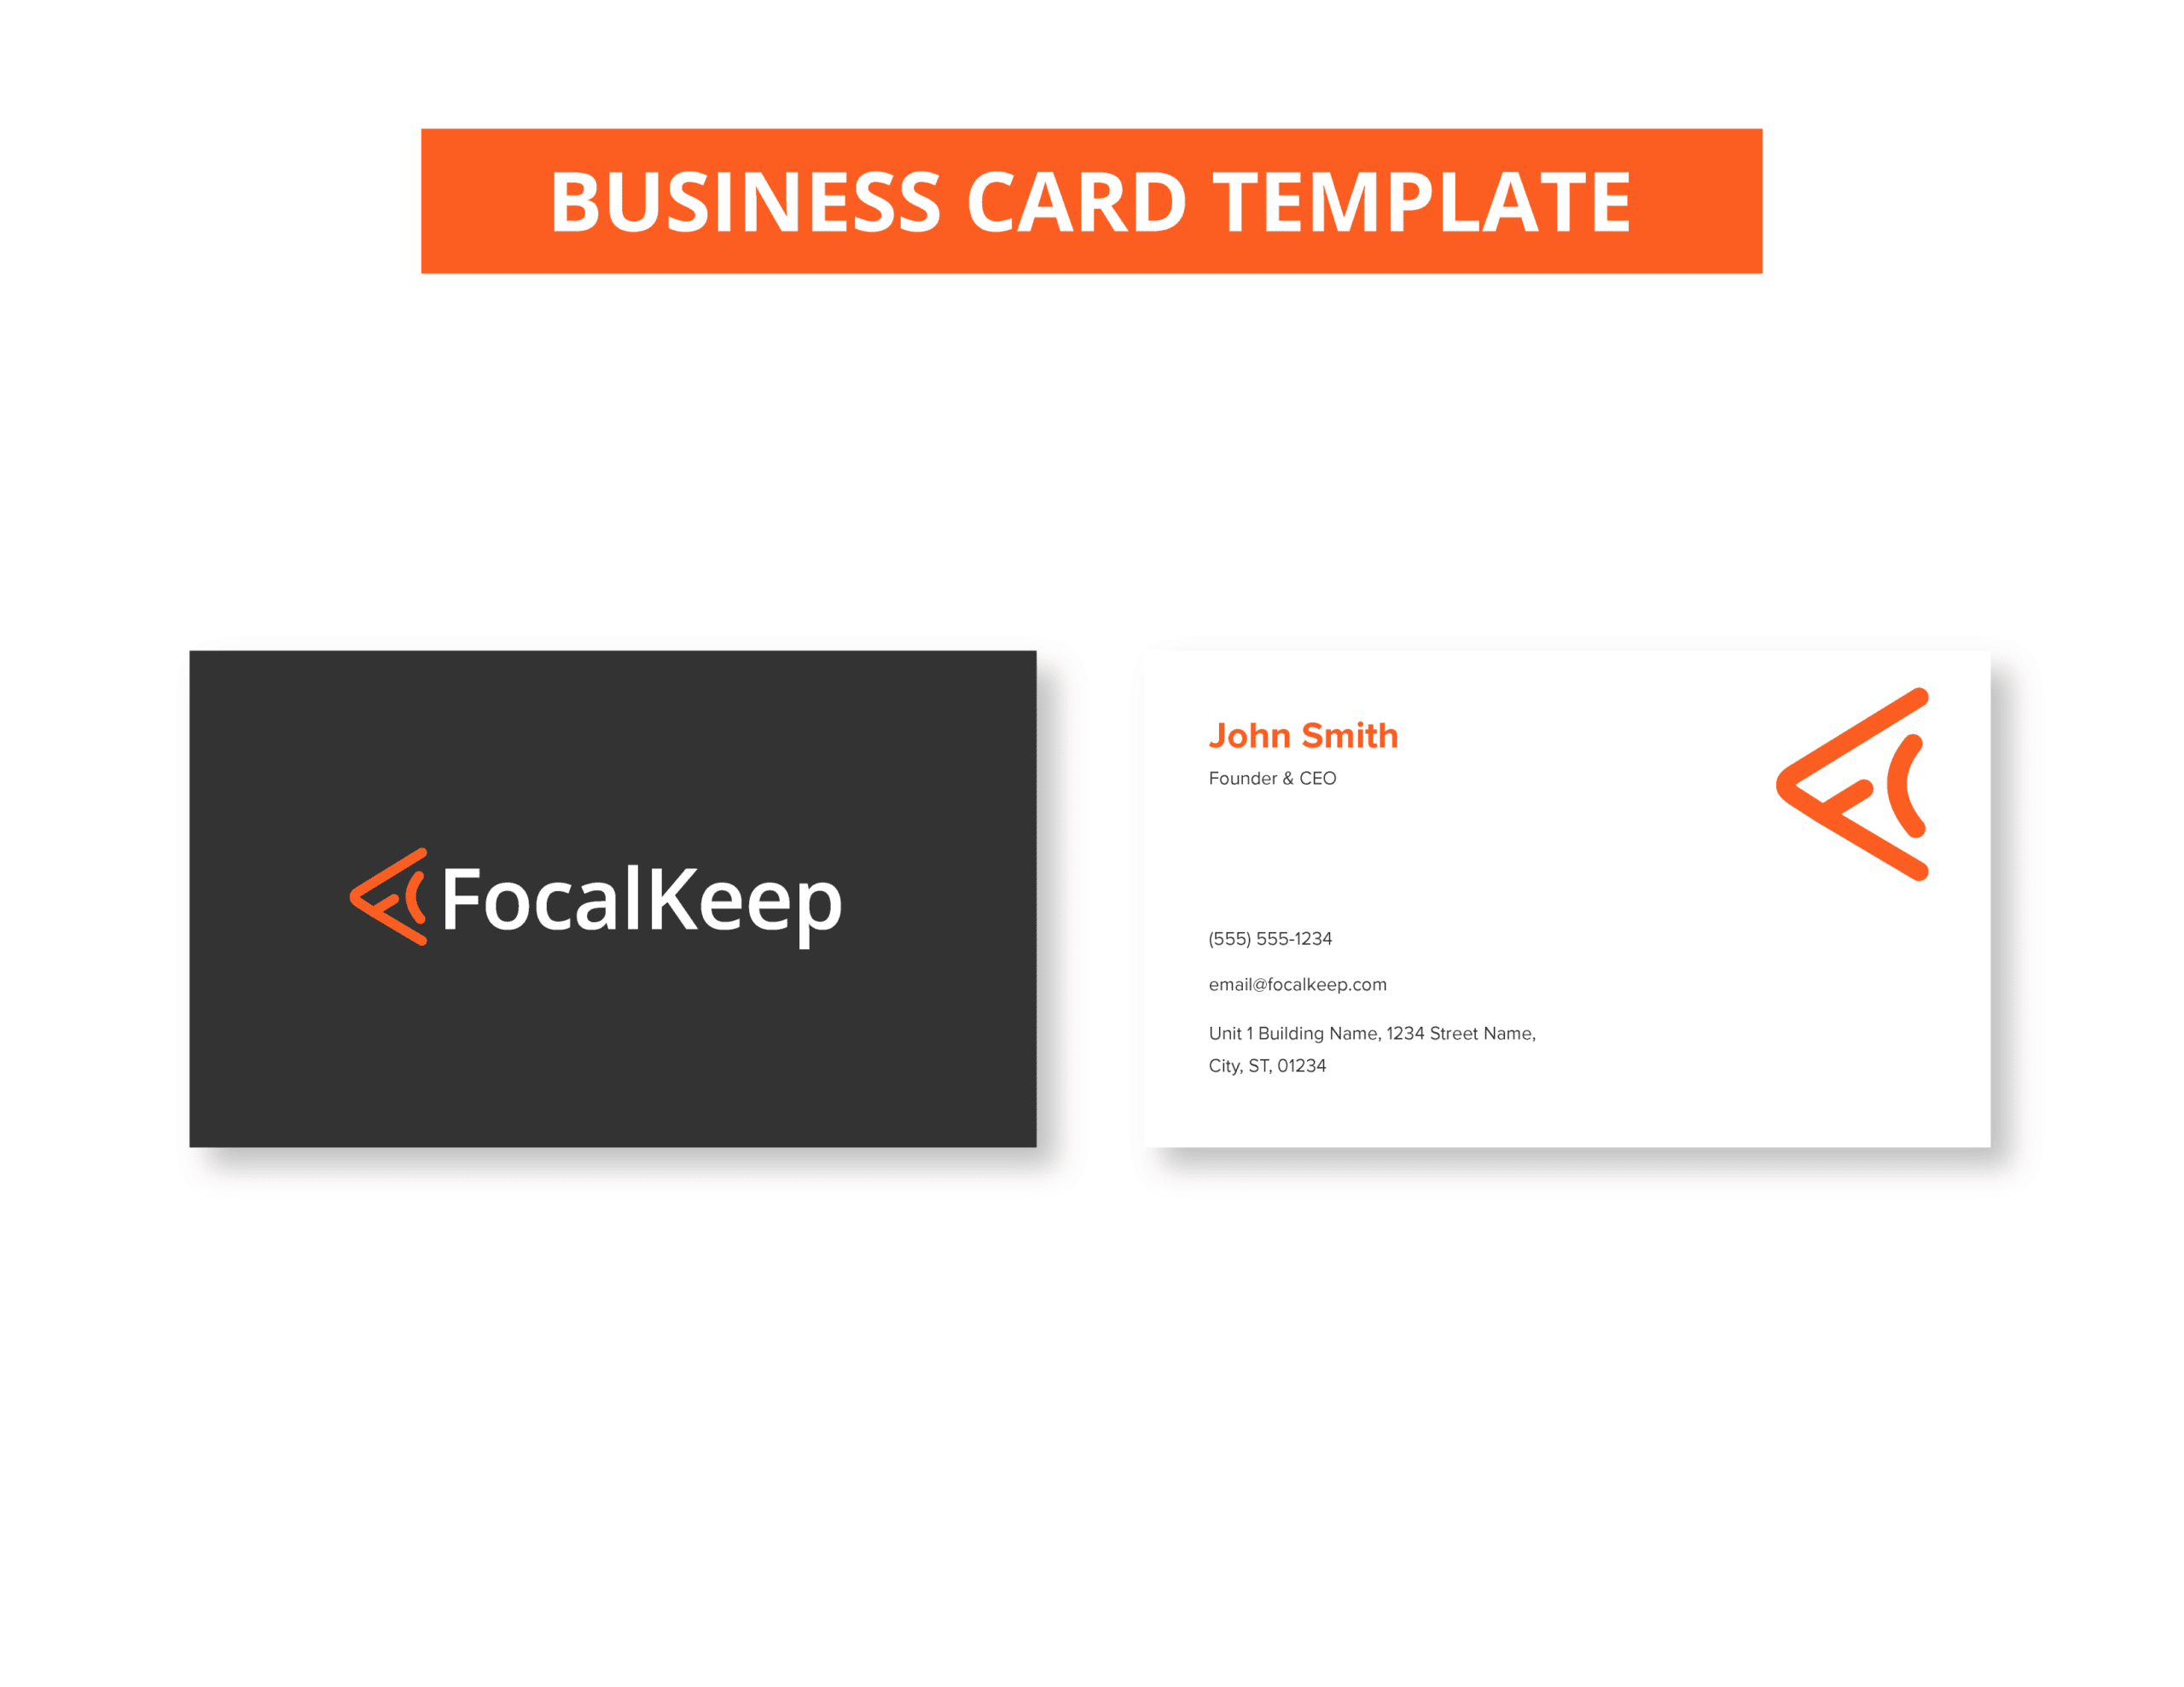 04Focal_Keep__Business Card Template